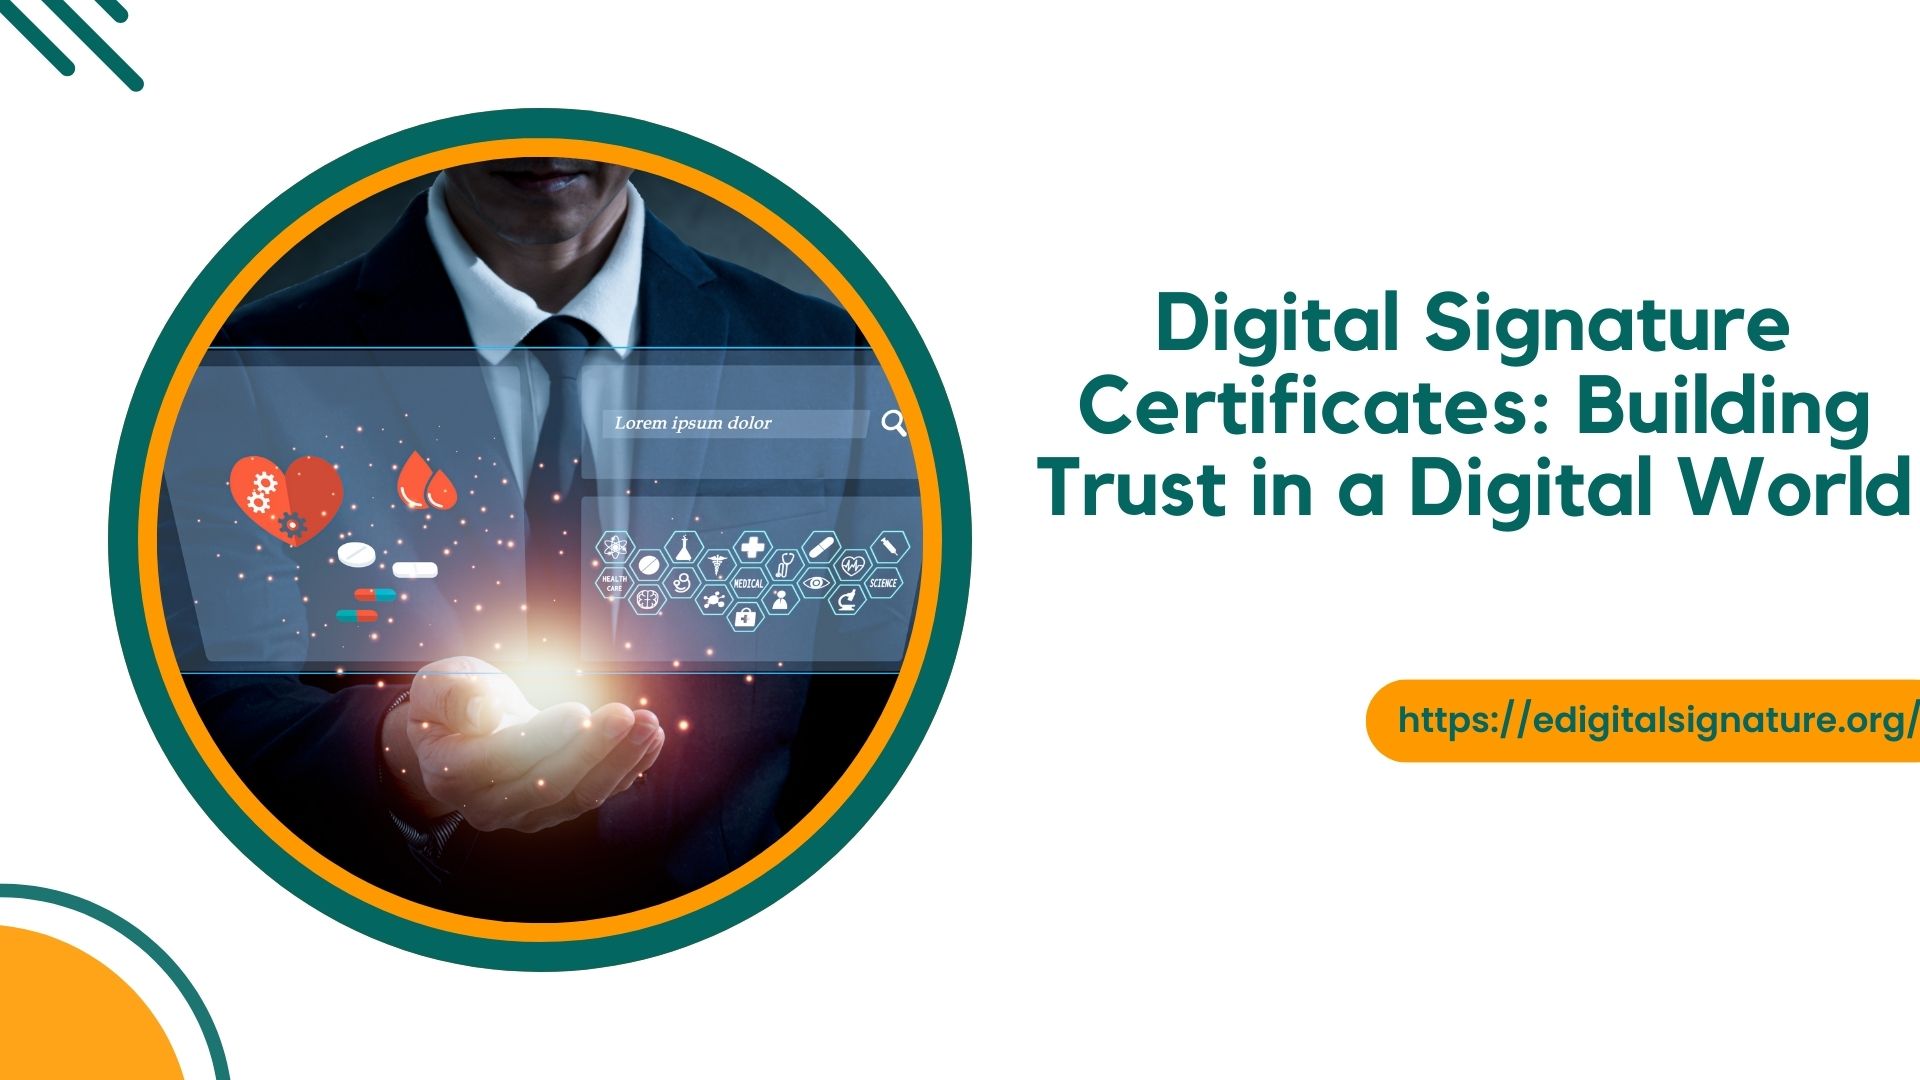 Digital Signature Certificates: Building Trust in a Digital World